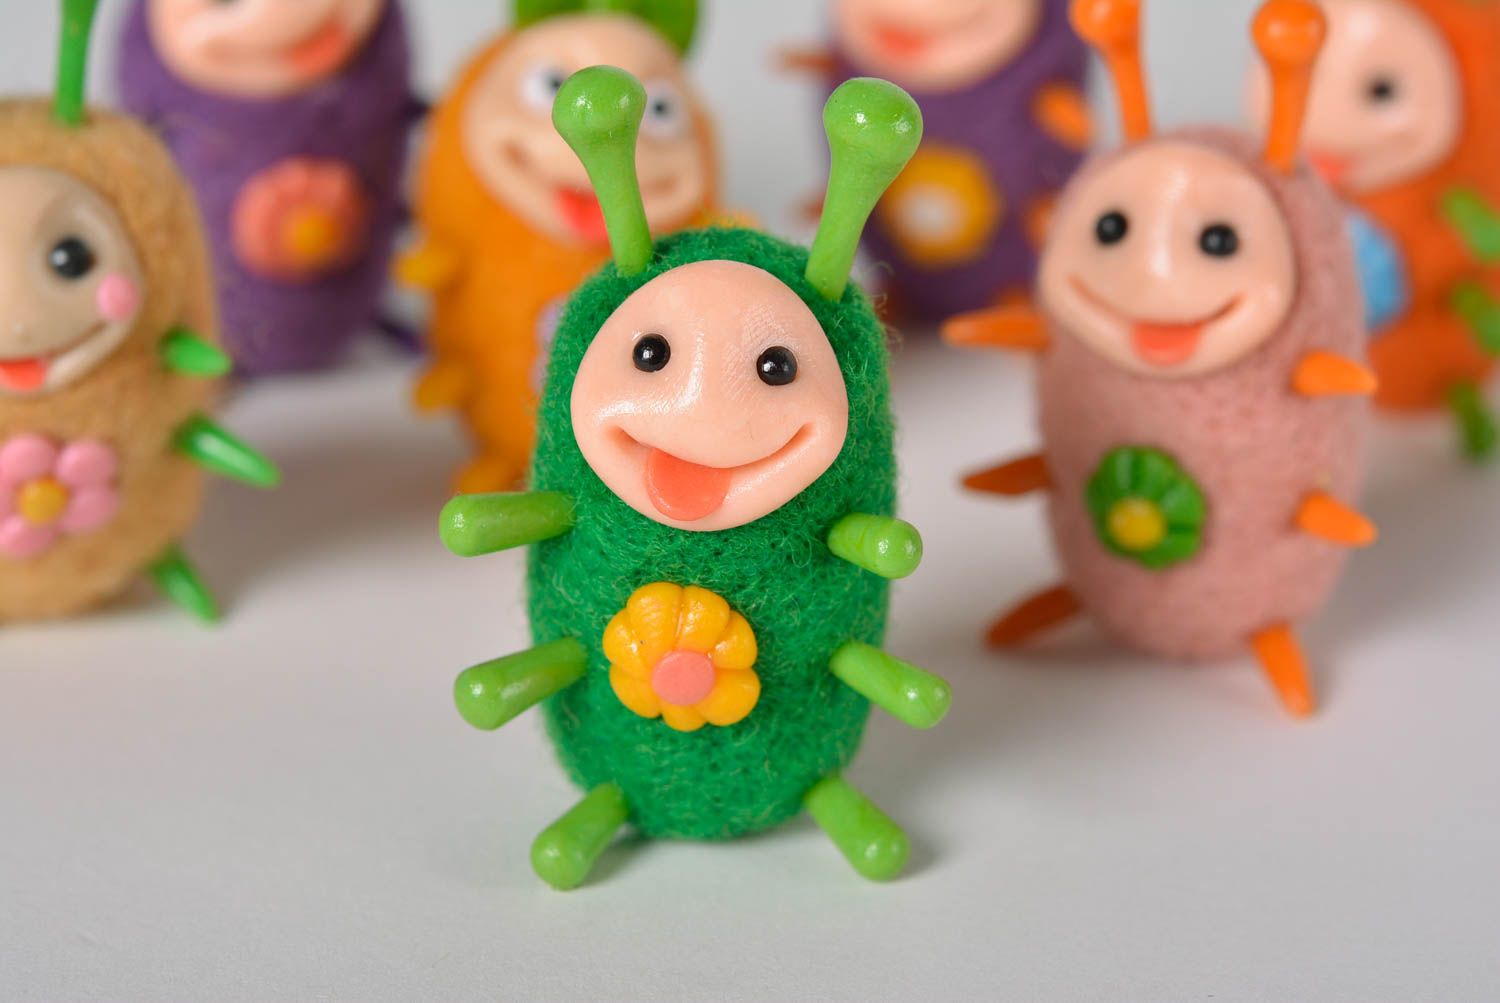 Handmade woolen green toy plastic designer figurine stylish statuette photo 4